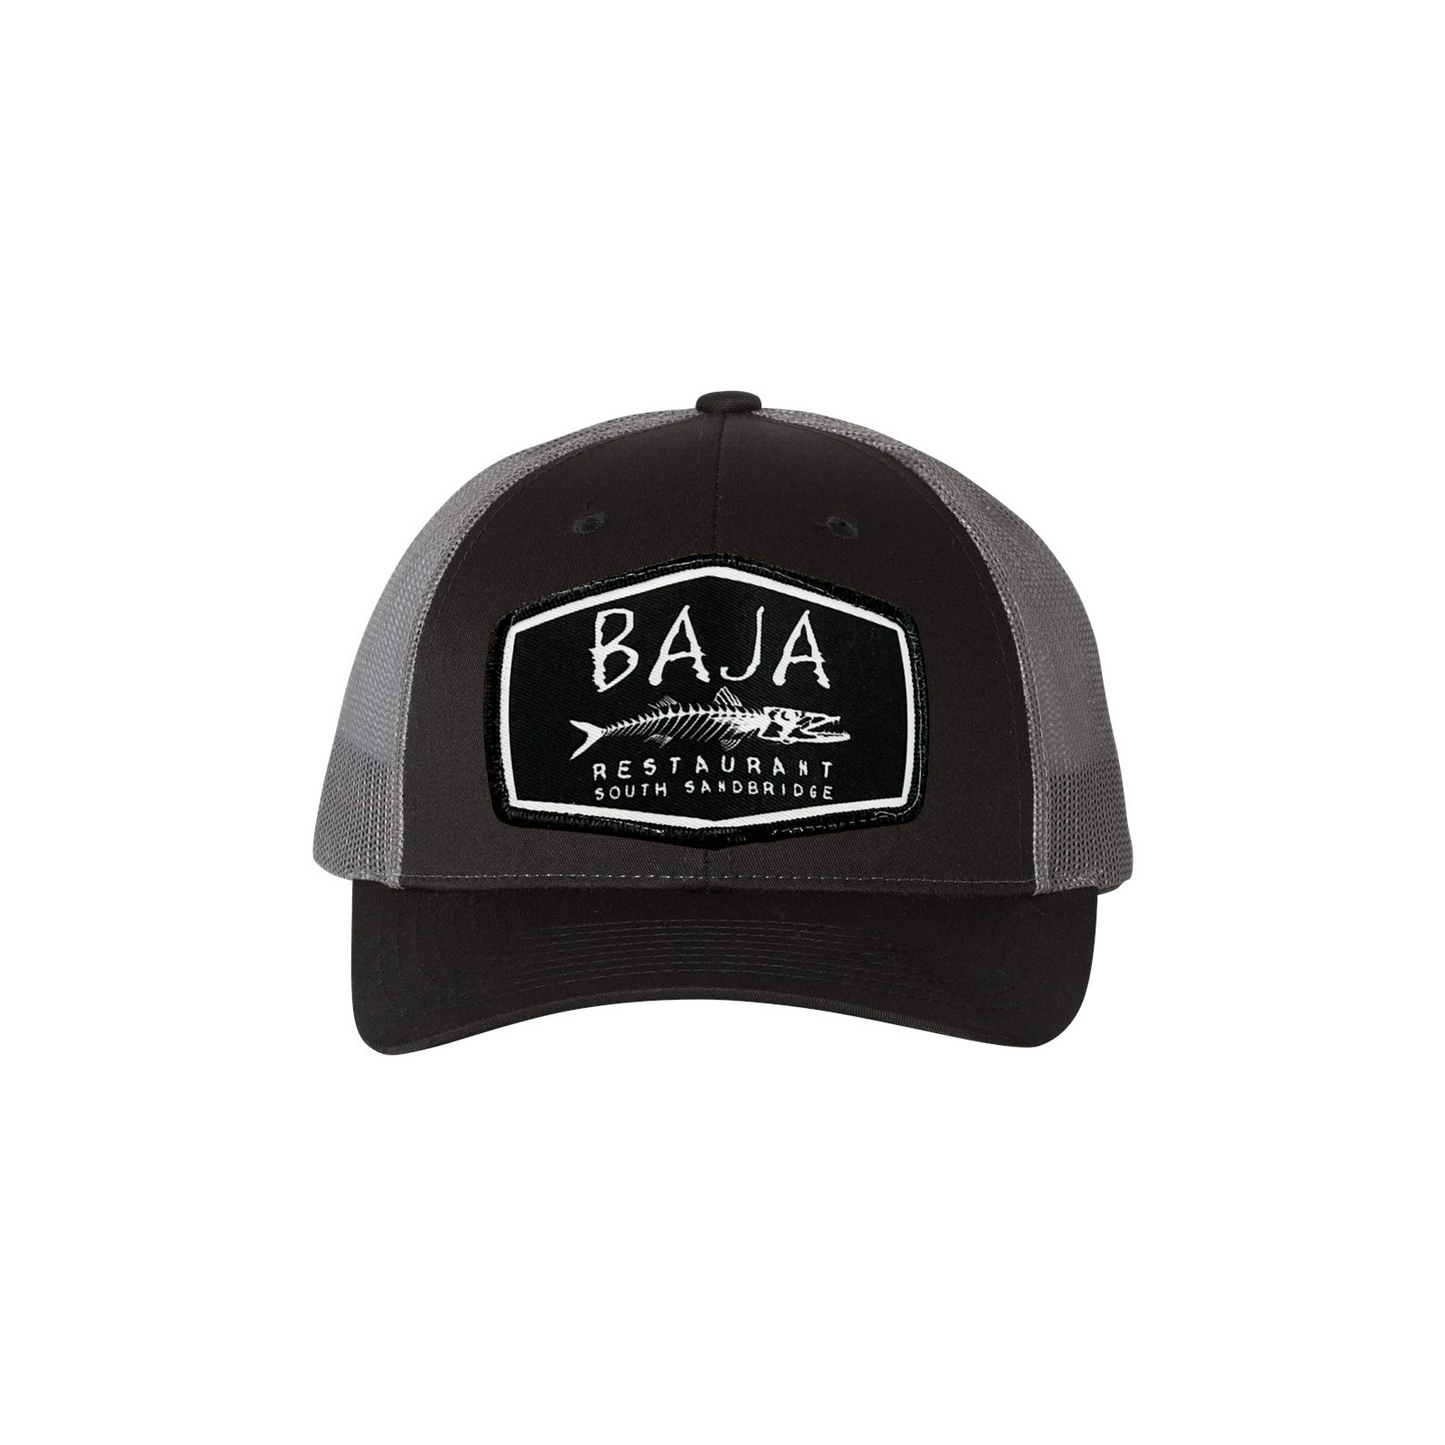 Baja Restaurant (Applique Embroidered Patch) - Trucker Hat (Richardson 115 - Black/Charcoal)